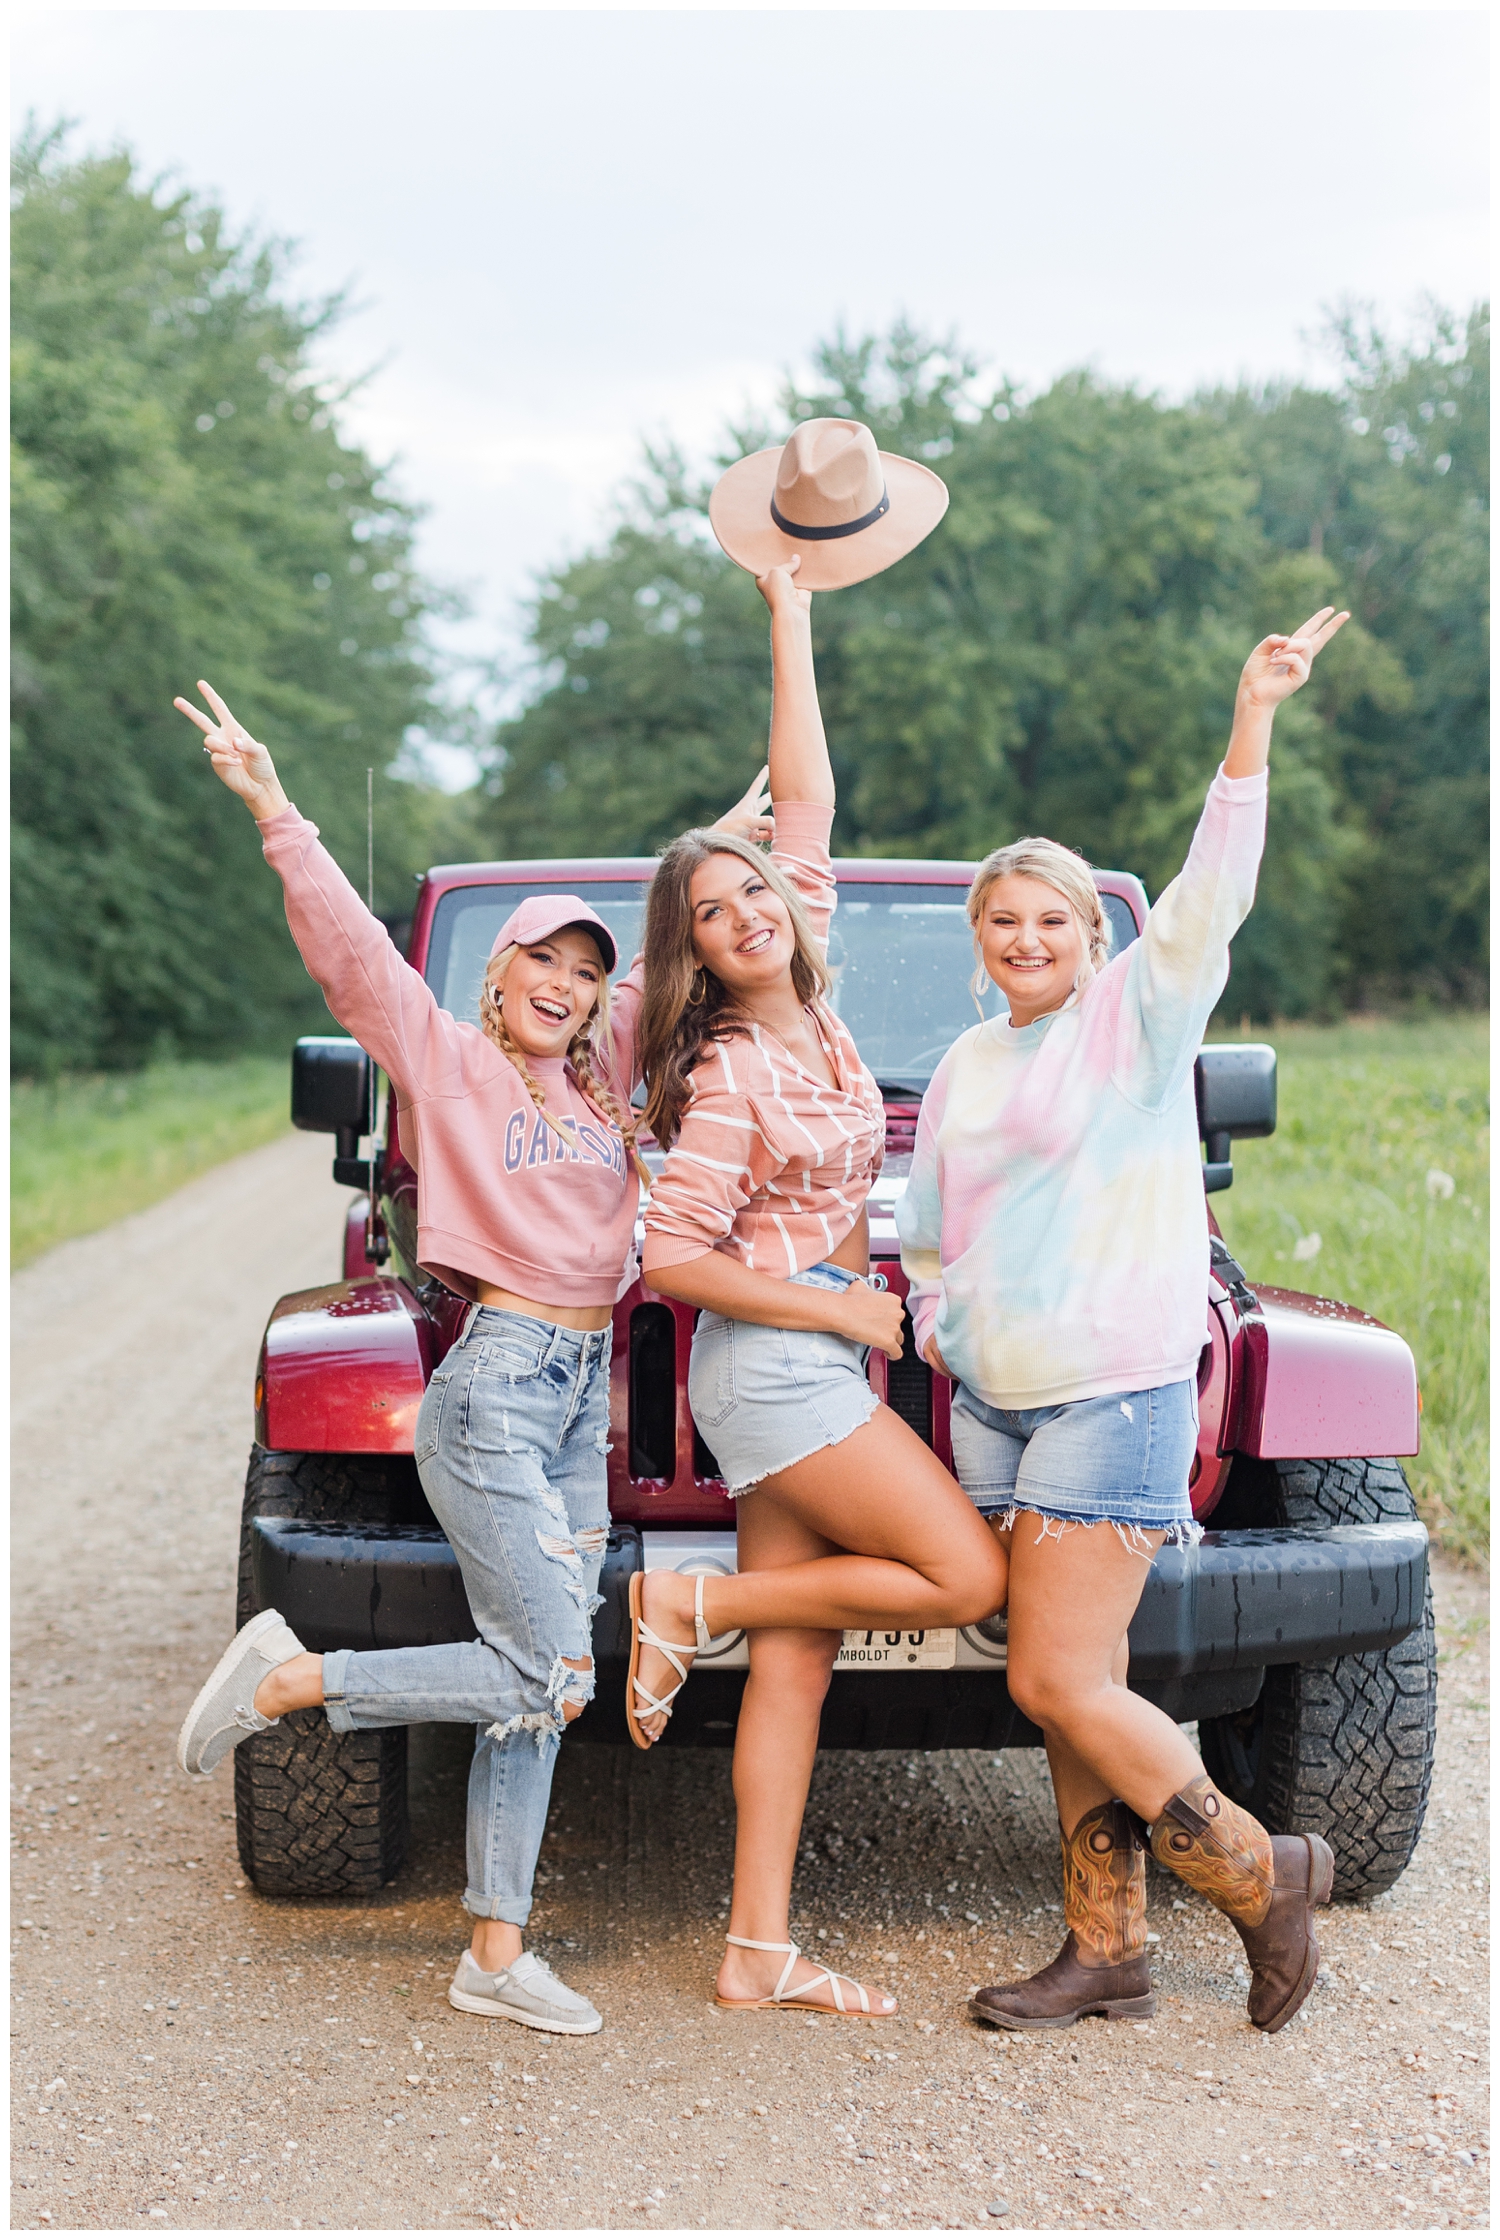 Senior girls celebrate a road trip in a maroon Jeep | CB Studio